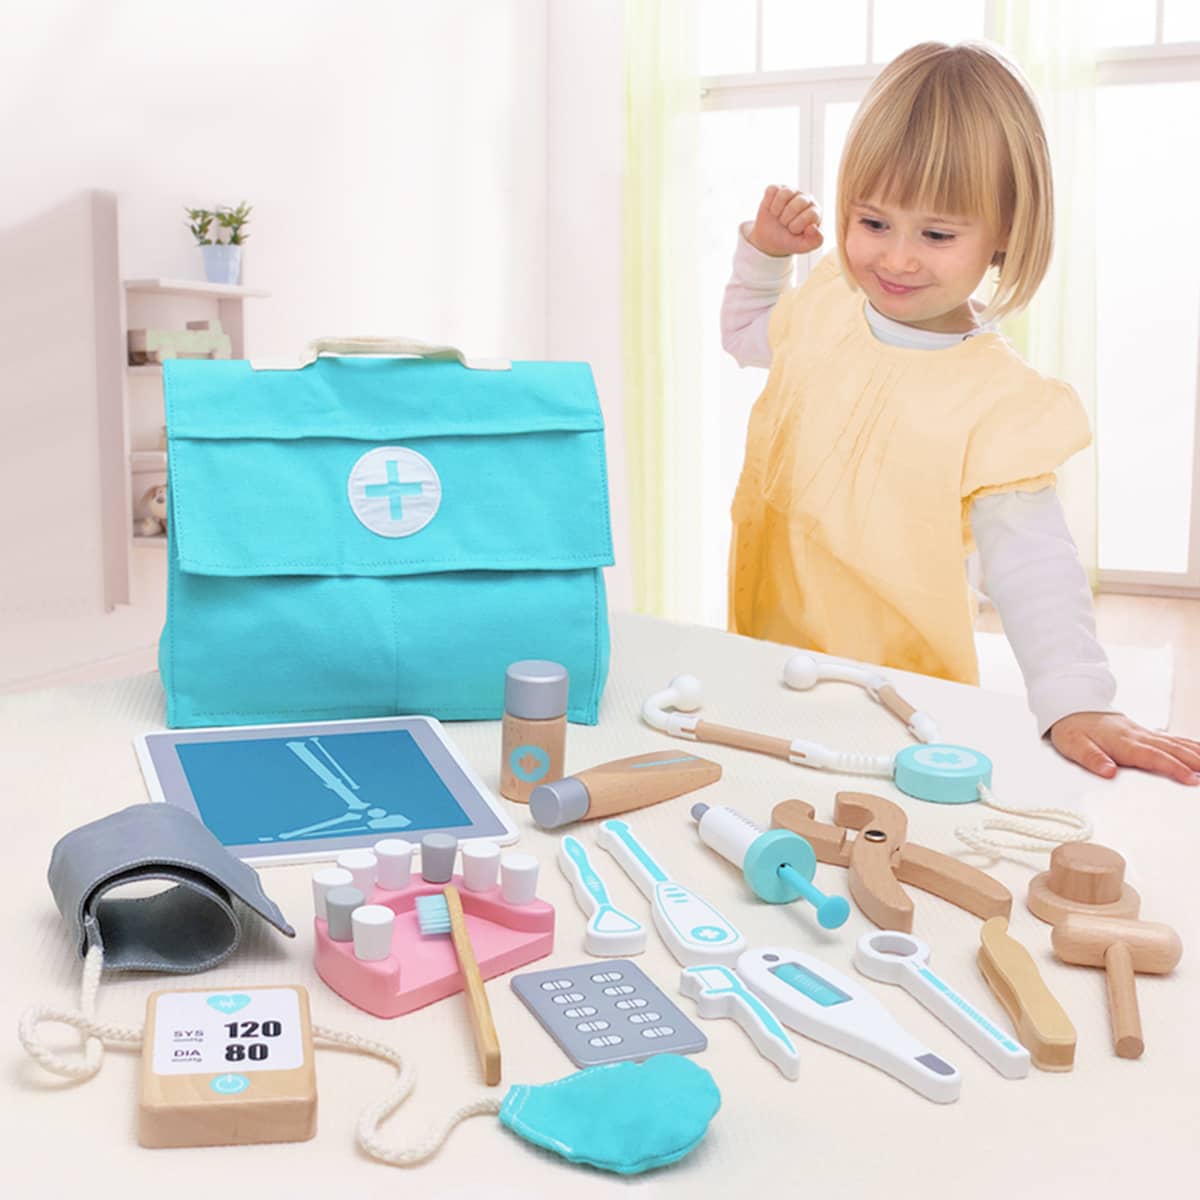 Tiny Land® Doctor Kit for Kids, Tiny Land Offical Store®